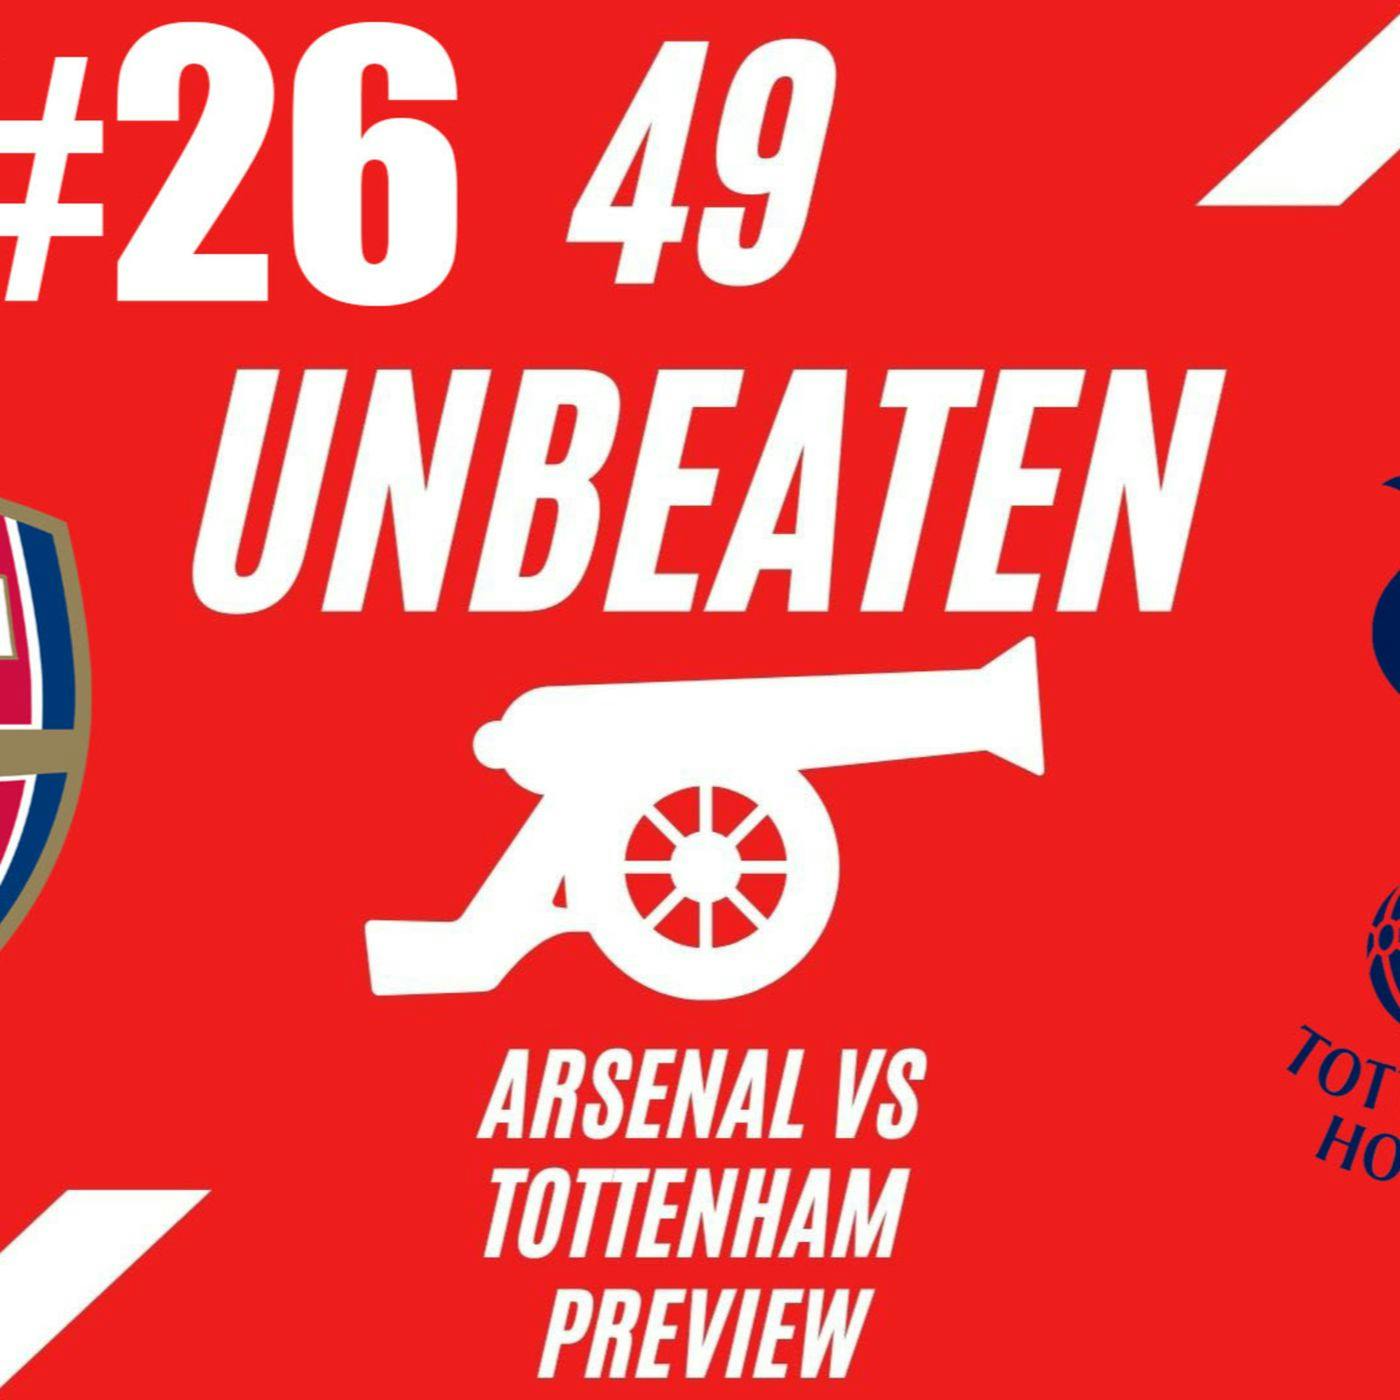 Arsenal vs Tottenham Preview